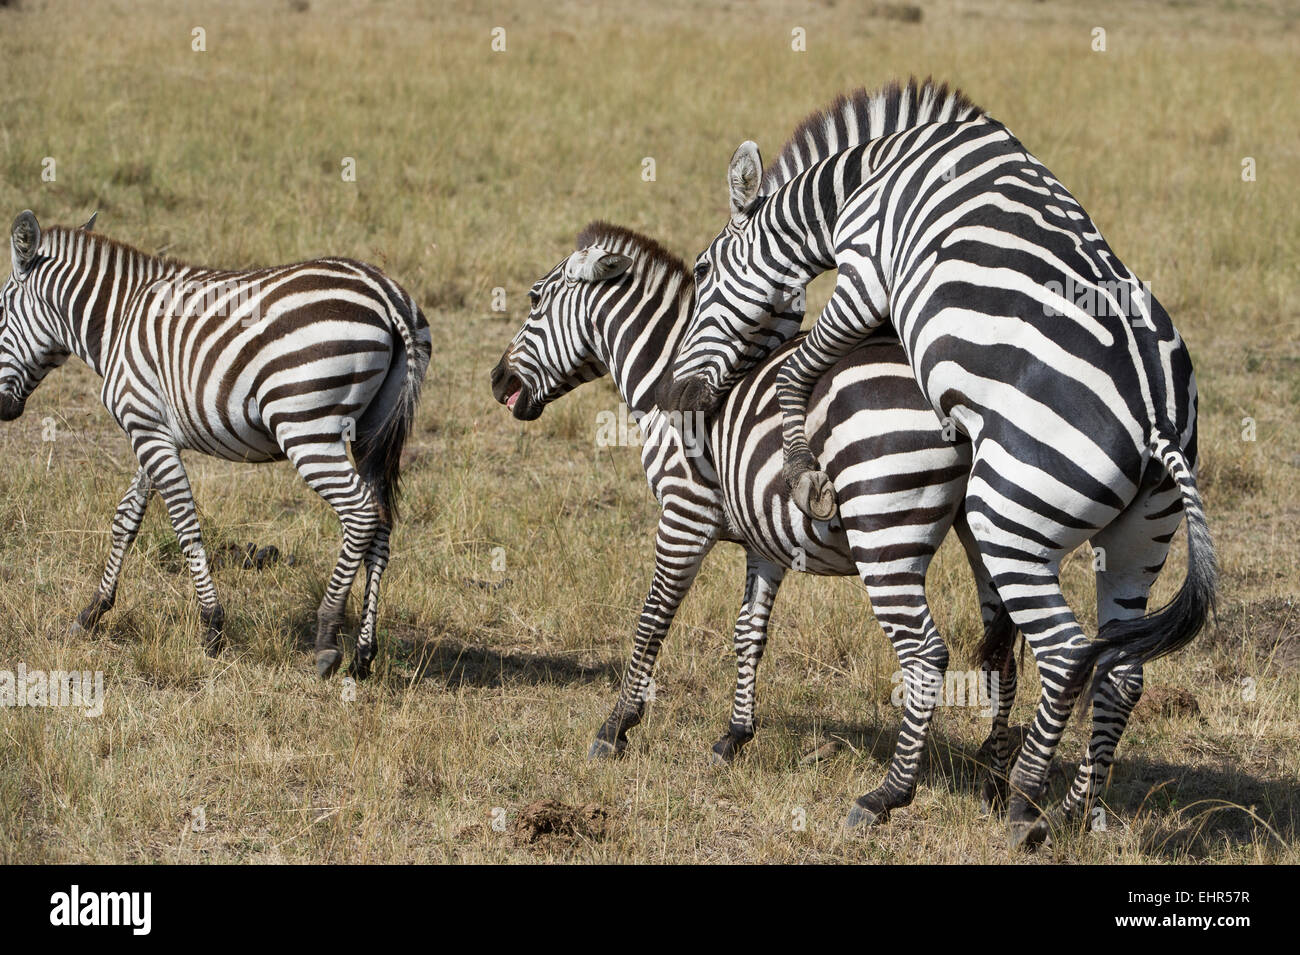 Zebra, luna di miele,Equus Fotodienst Schreyer 0049 172 162 5407 www.sportfoto-schreyer.jimdo.com Afrika,in Kenia, Massai Mara 2015 Foto Stock